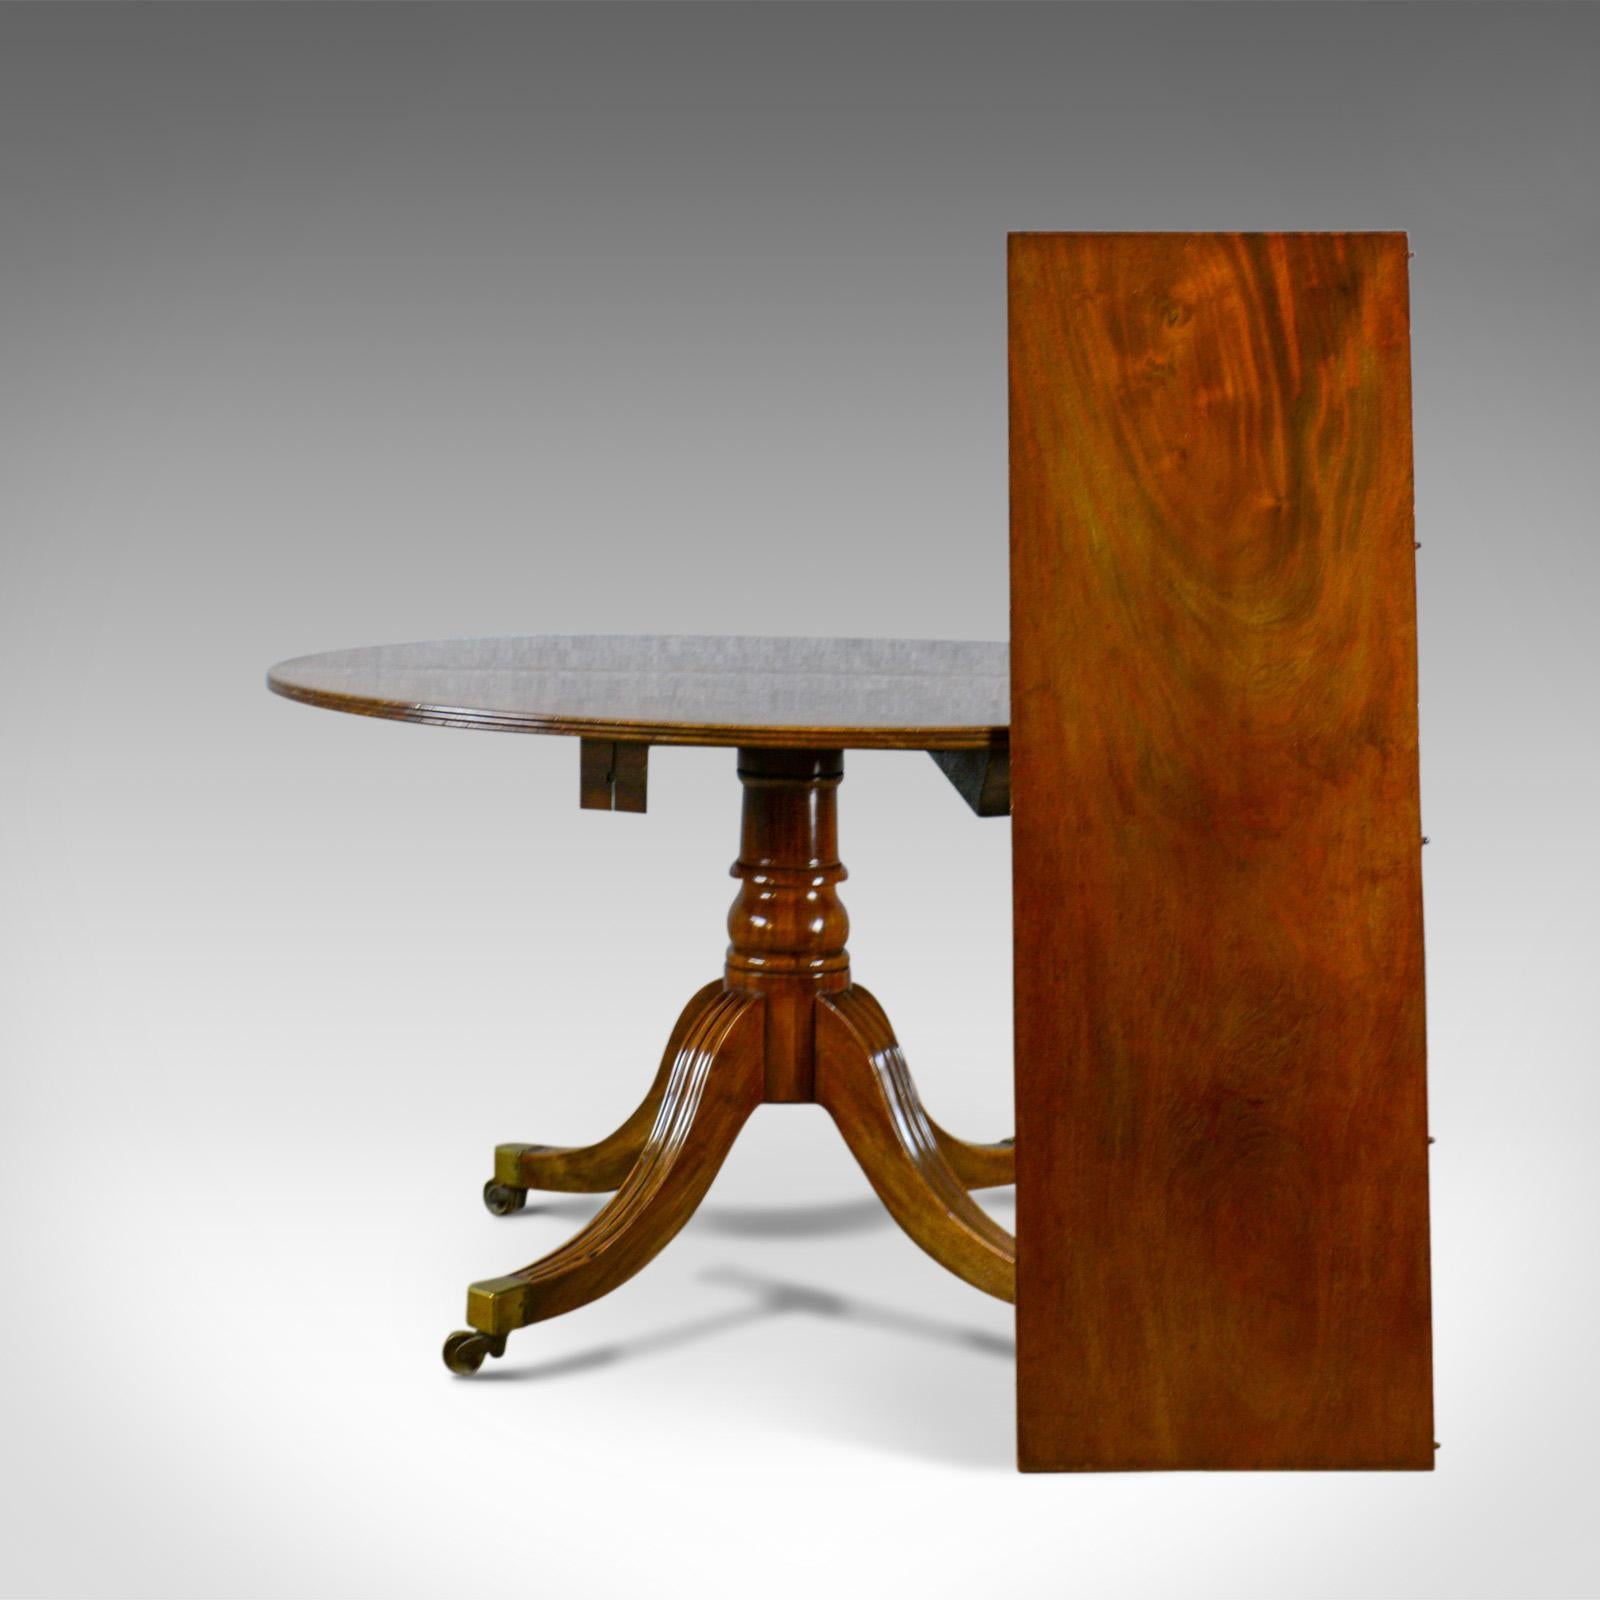 Antique Dining Table, English, Regency, Extending, Seats 4-6, Mahogany 1